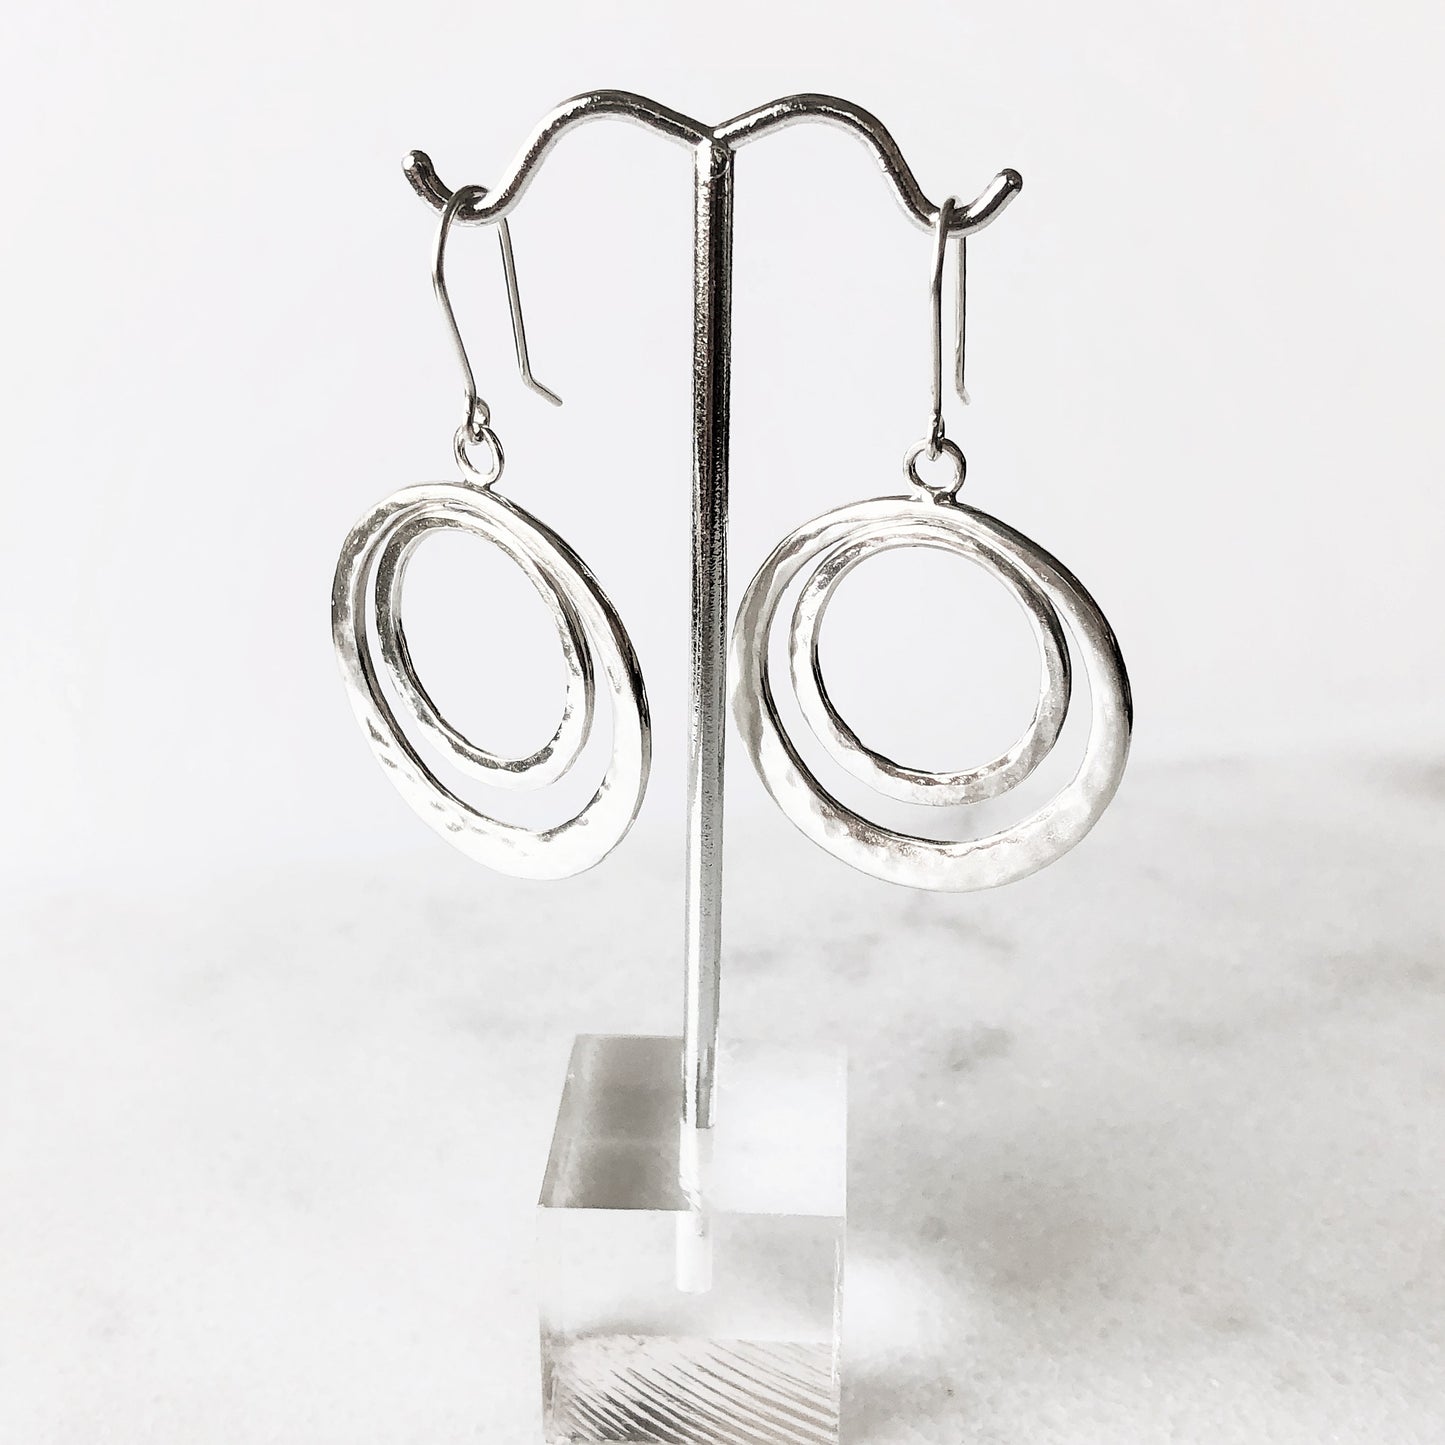 Large double hoop earrings in sterling silver